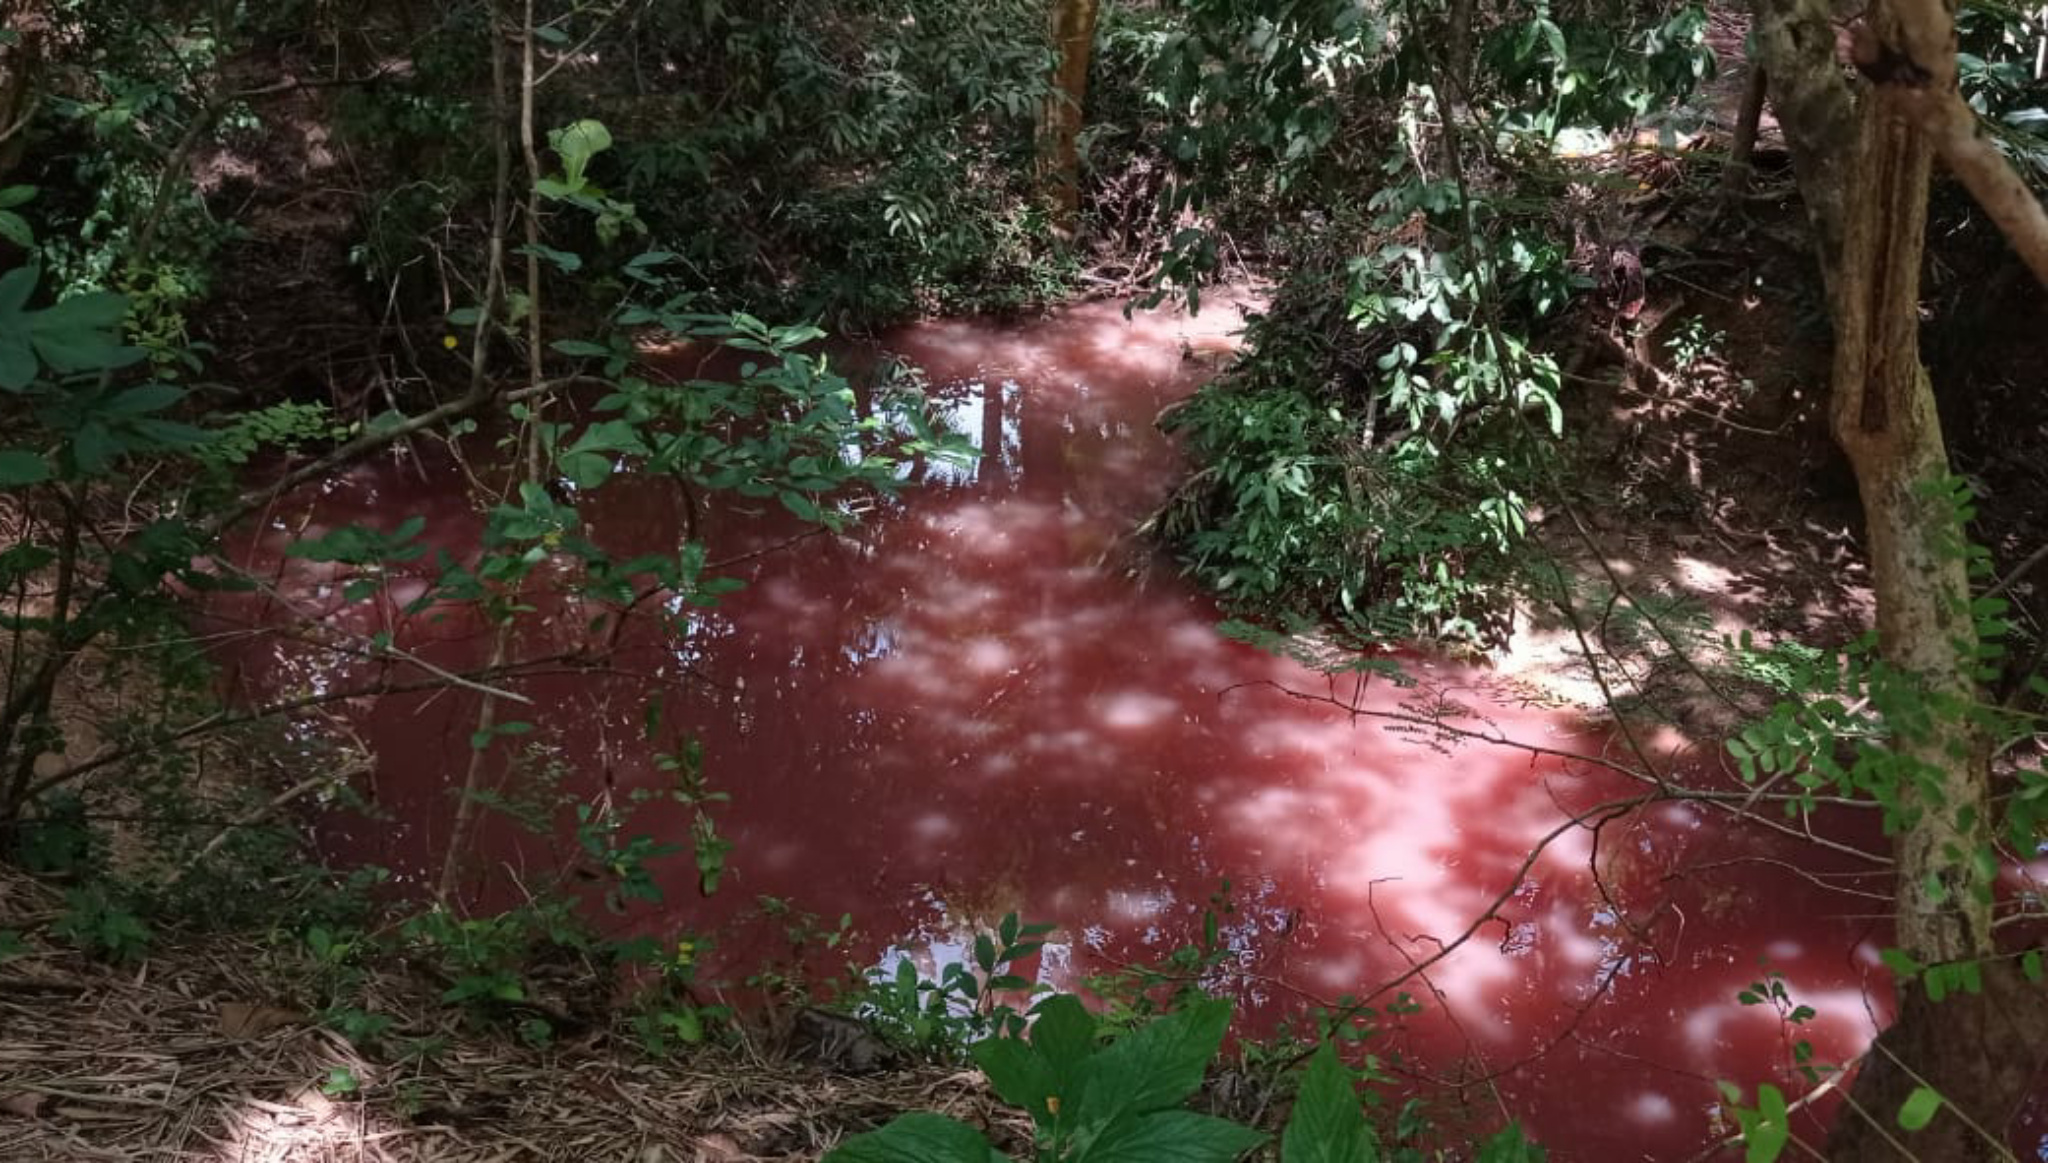 Warga Banuaju Barat Sumenep Geger, Air Sungai Setempat Berubah Jadi Warna Merah